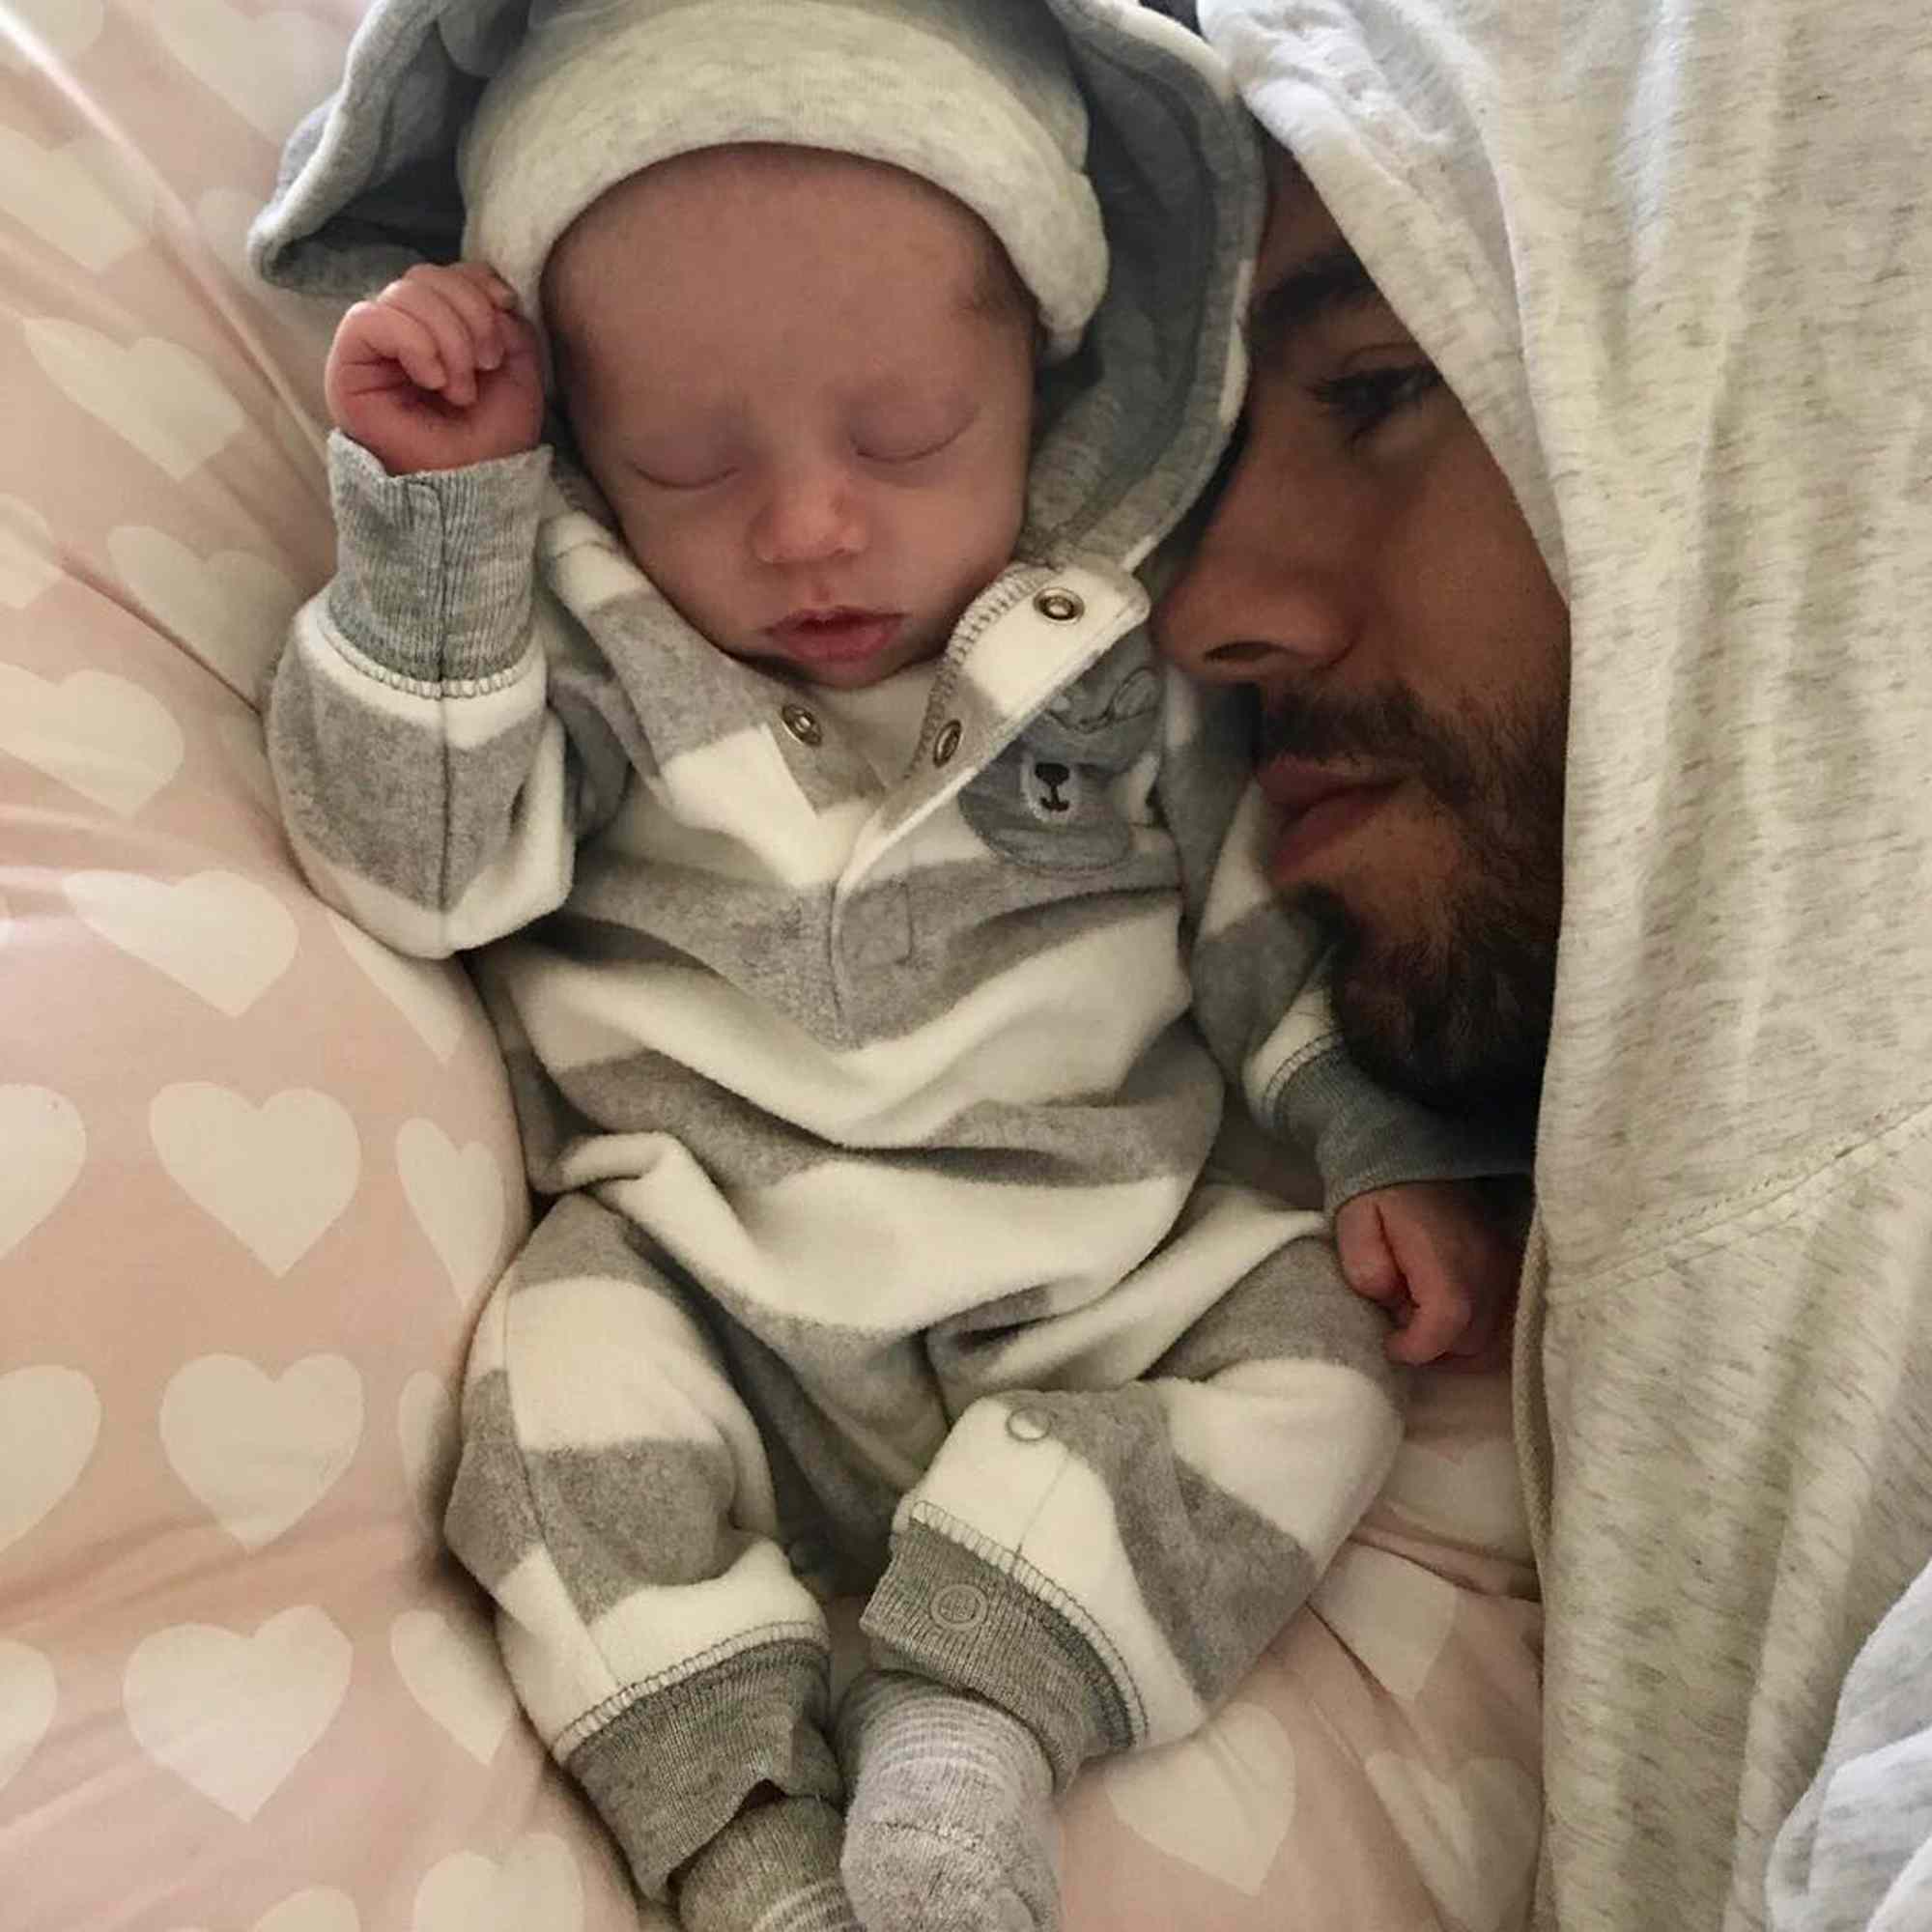 Enrique Iglesias and his baby